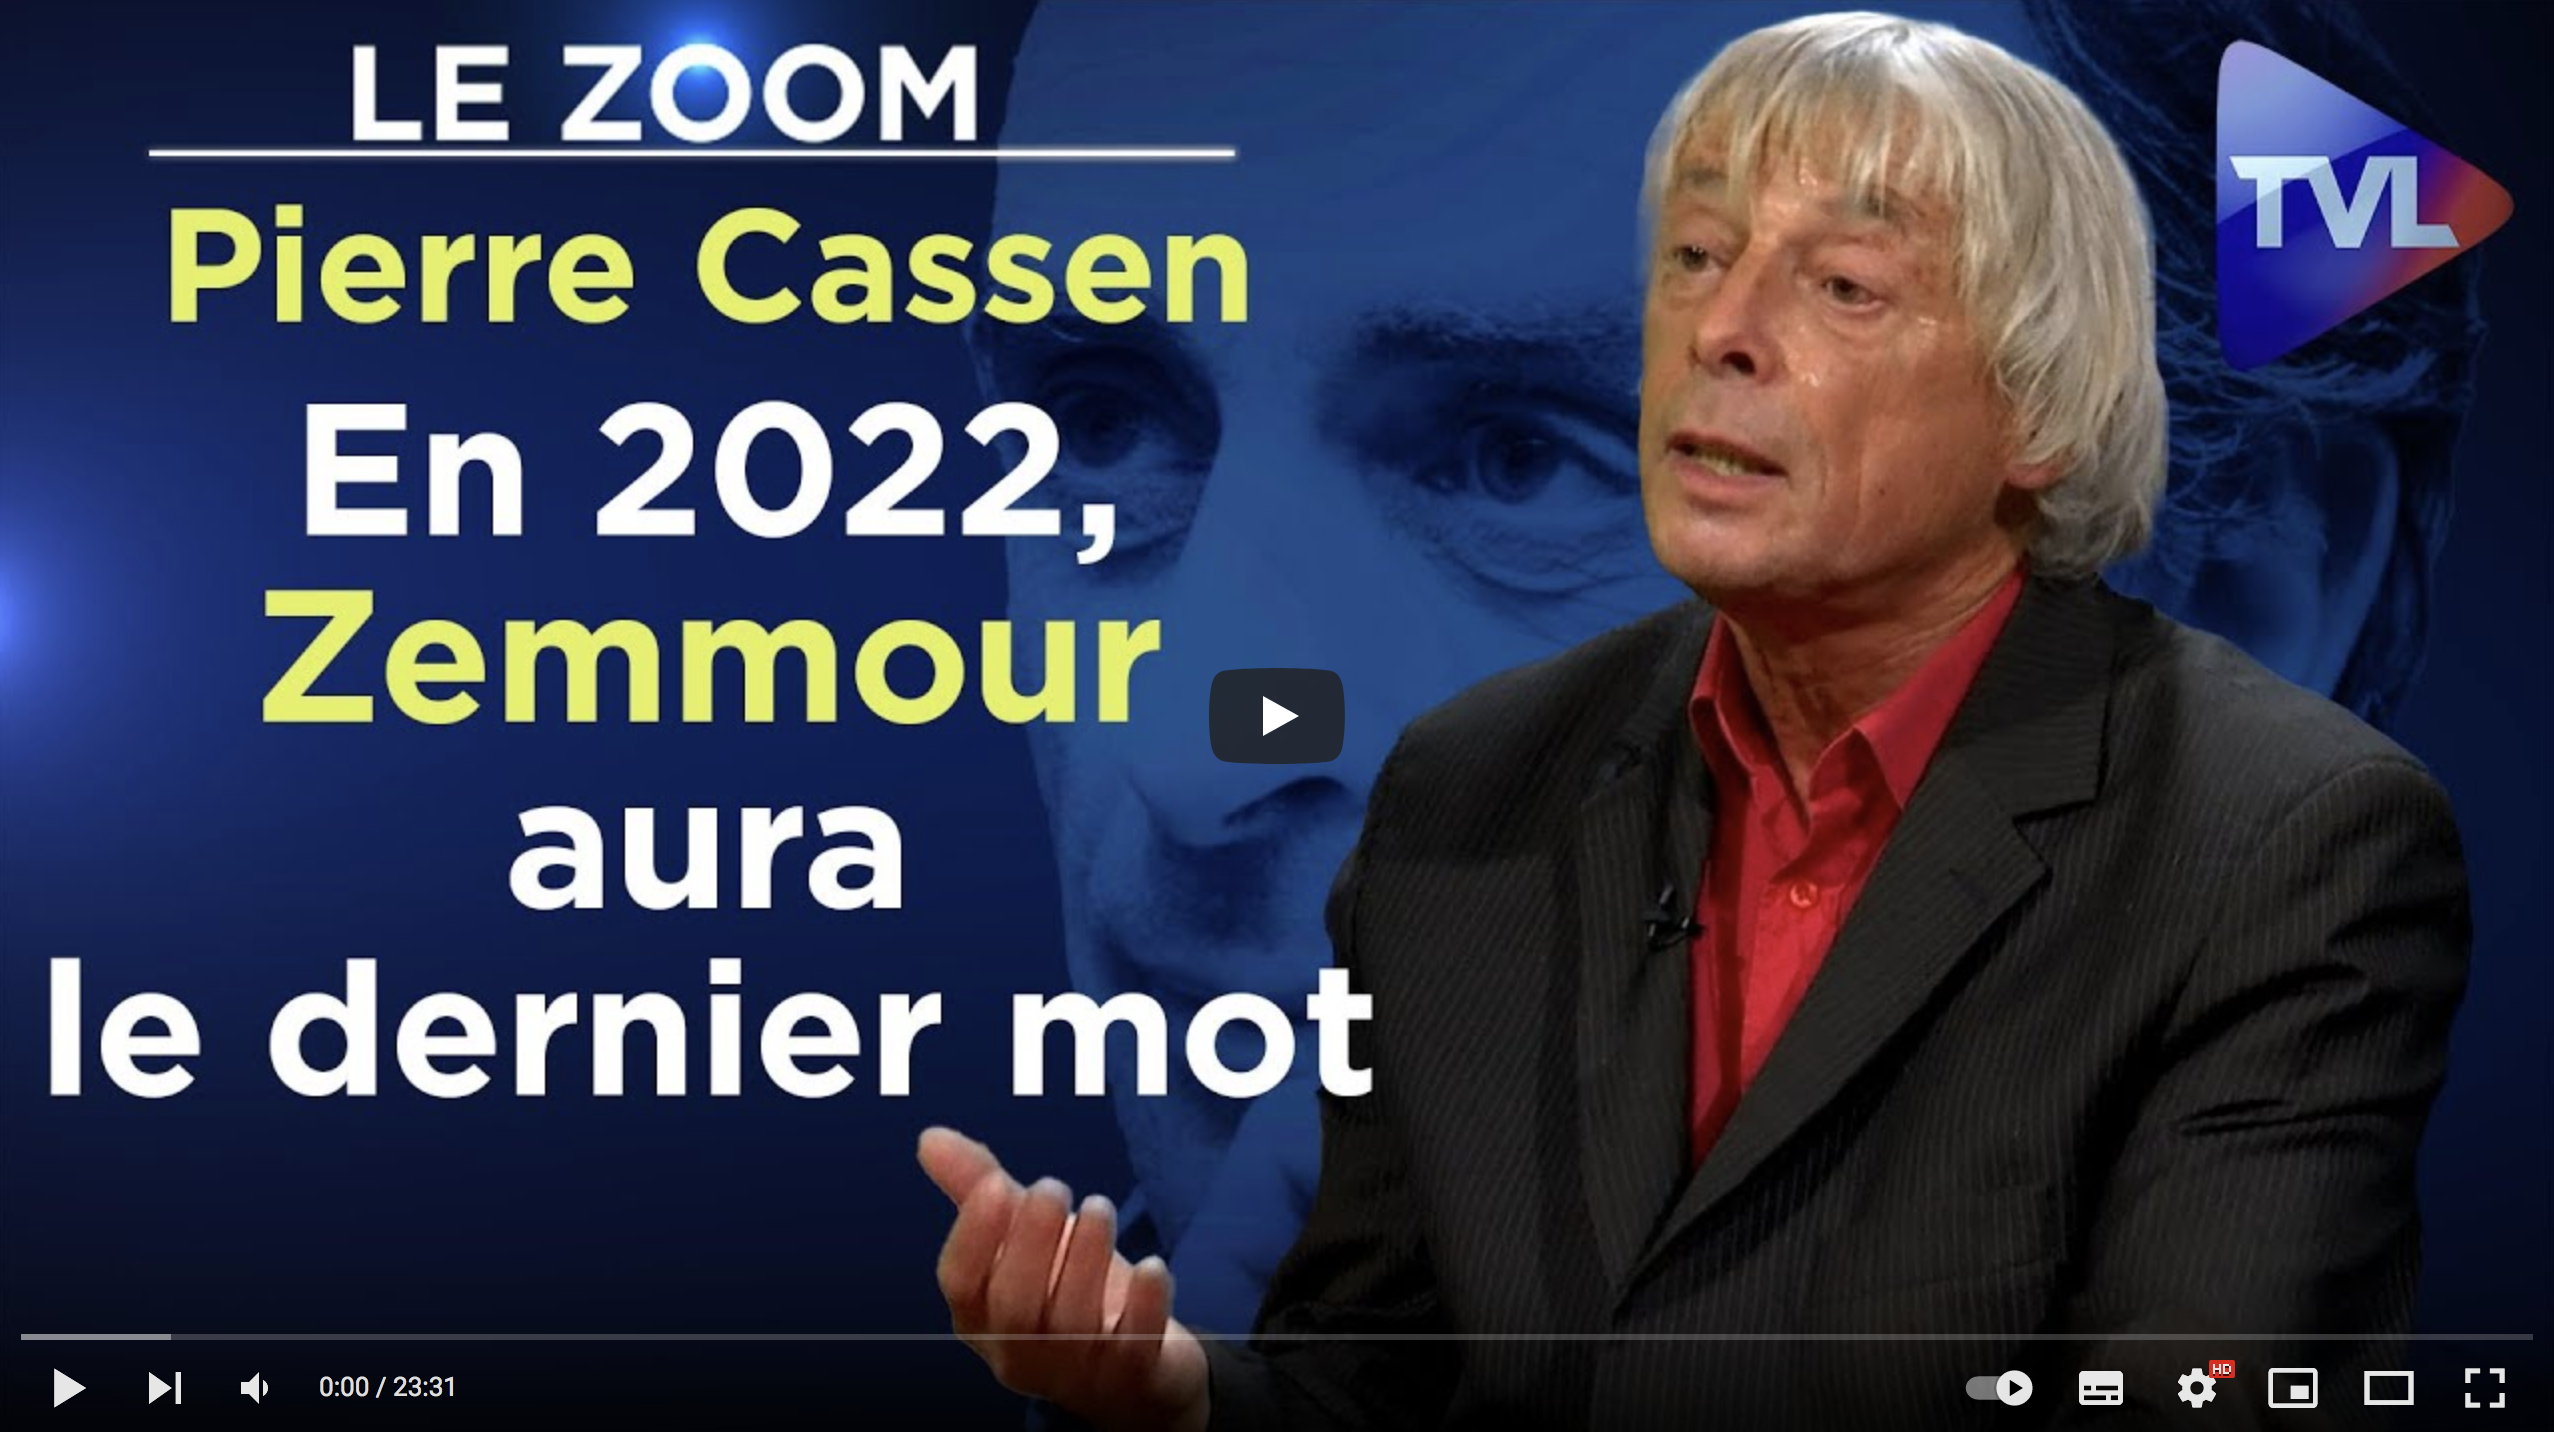 Pierre Cassen : “En 2022, Zemmour aura le dernier mot” (VIDÉO)